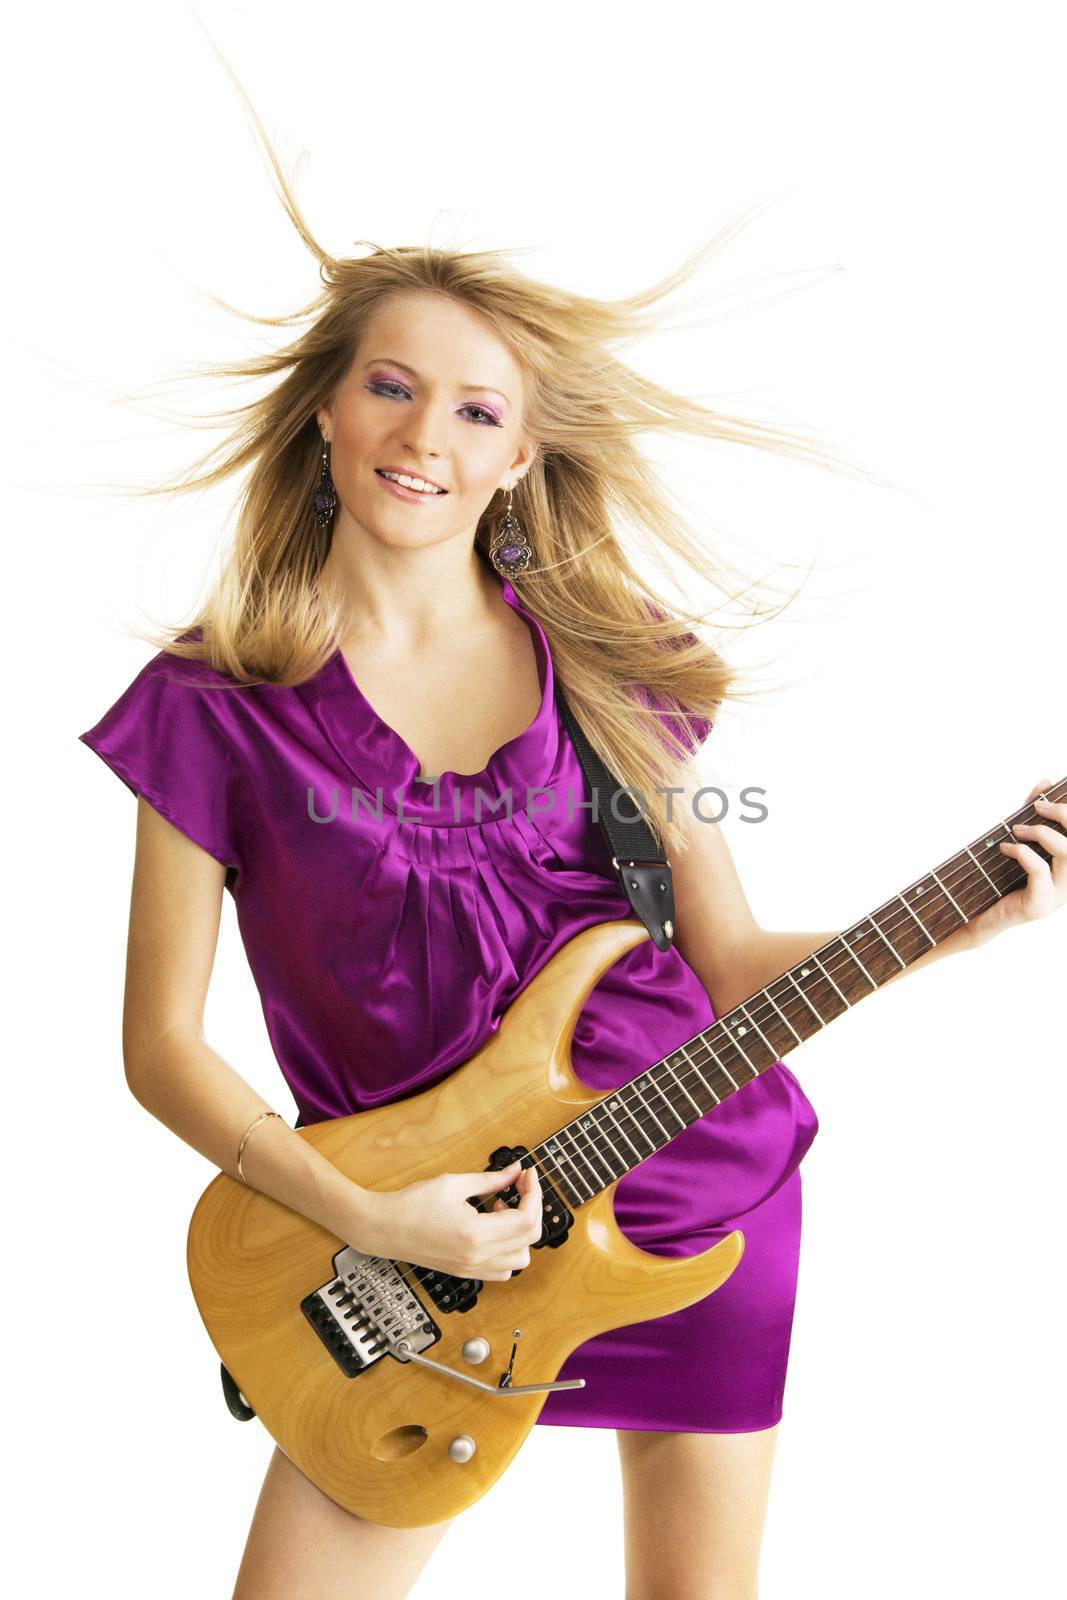 Hot girl playing an electric guitar by Gdolgikh